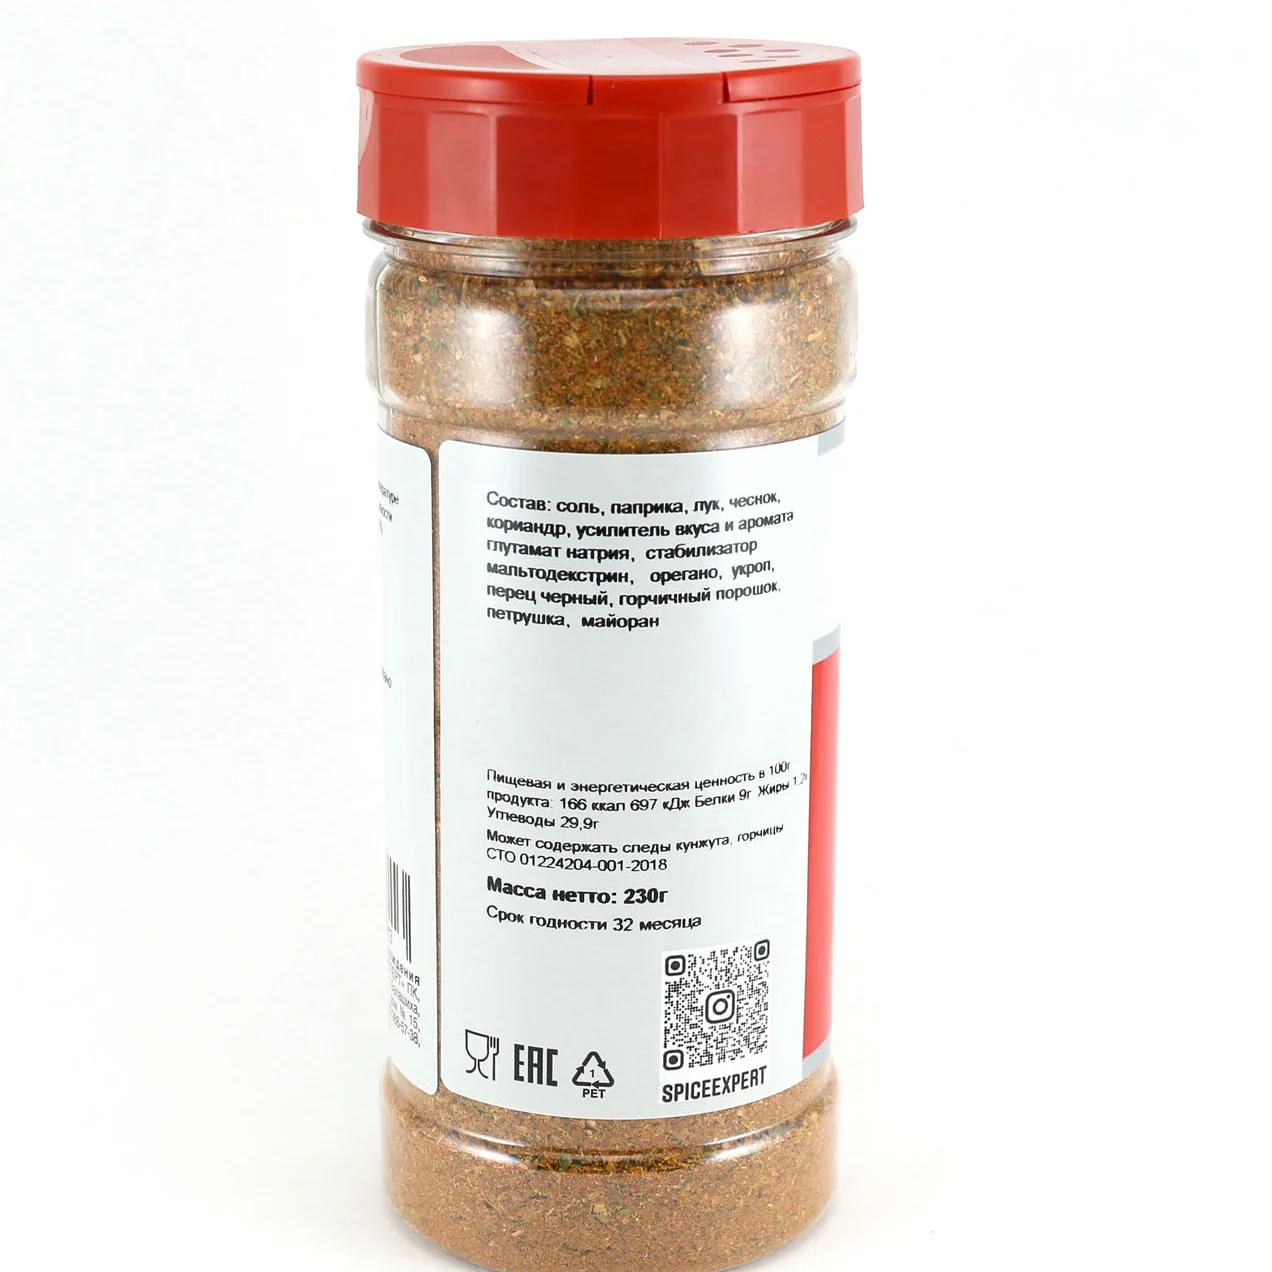 Seasoning "For potatoes" 230g (360ml) can of SpiceExpert